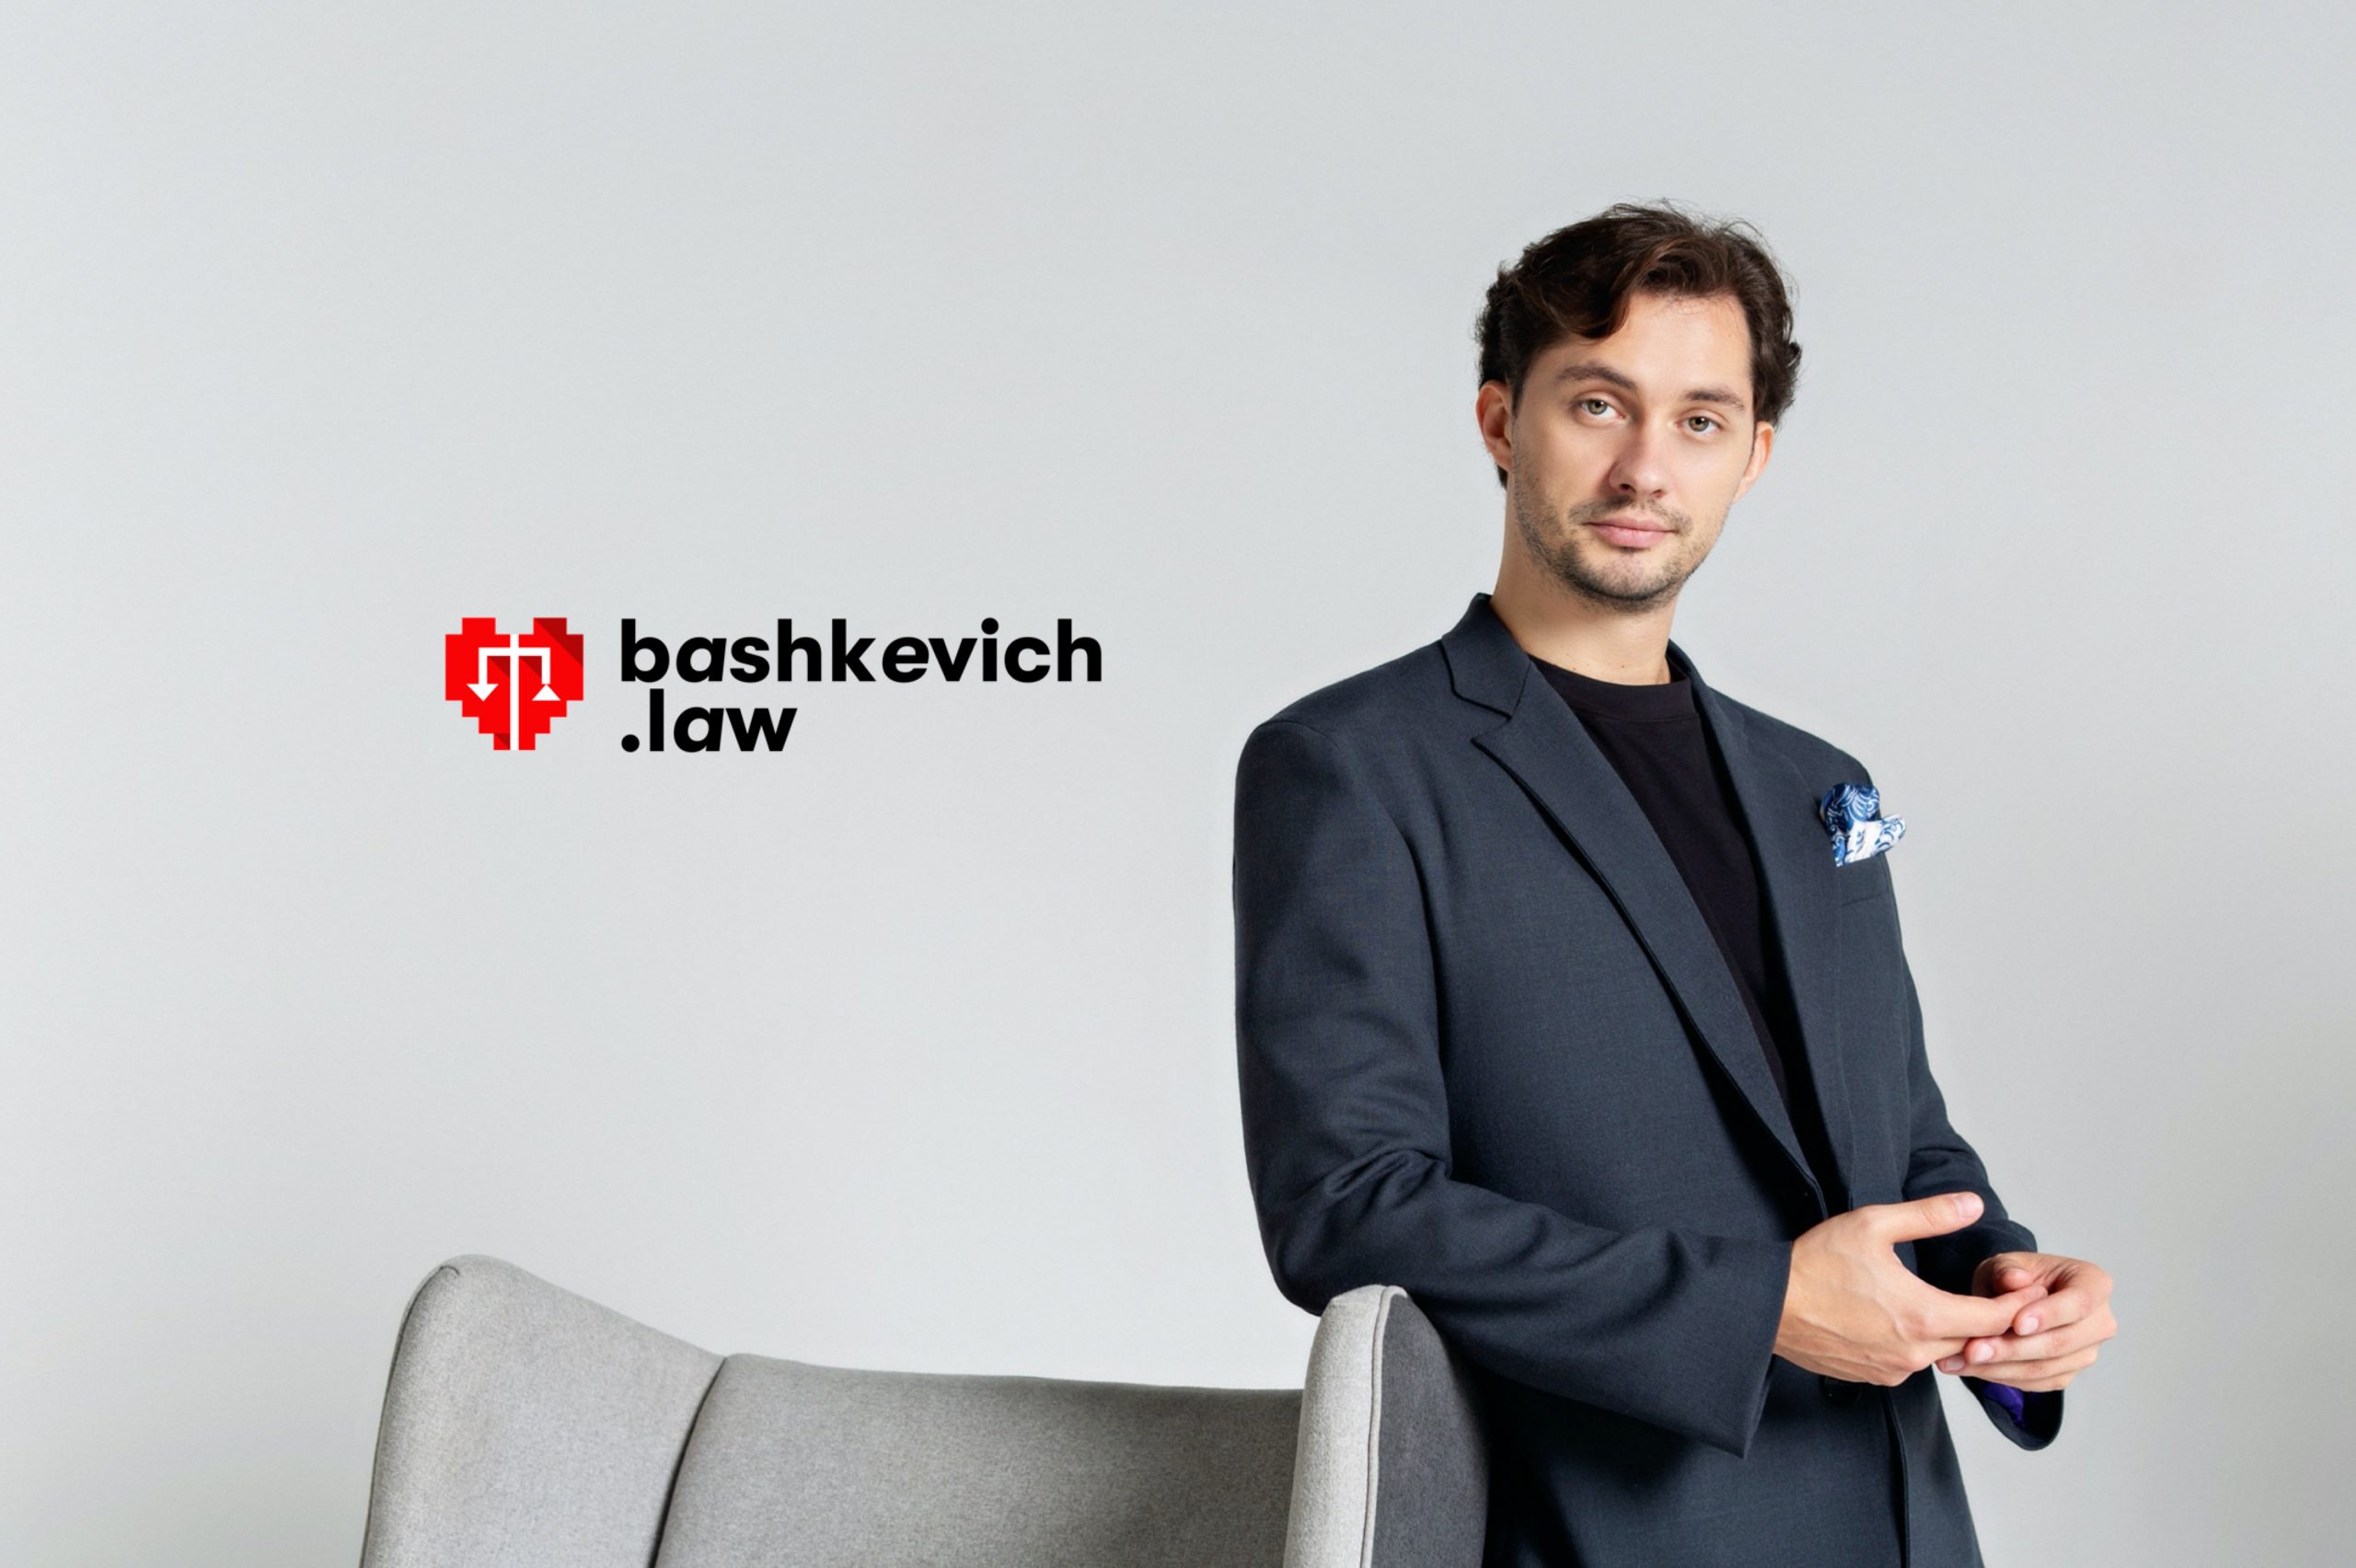 bashkevich law price